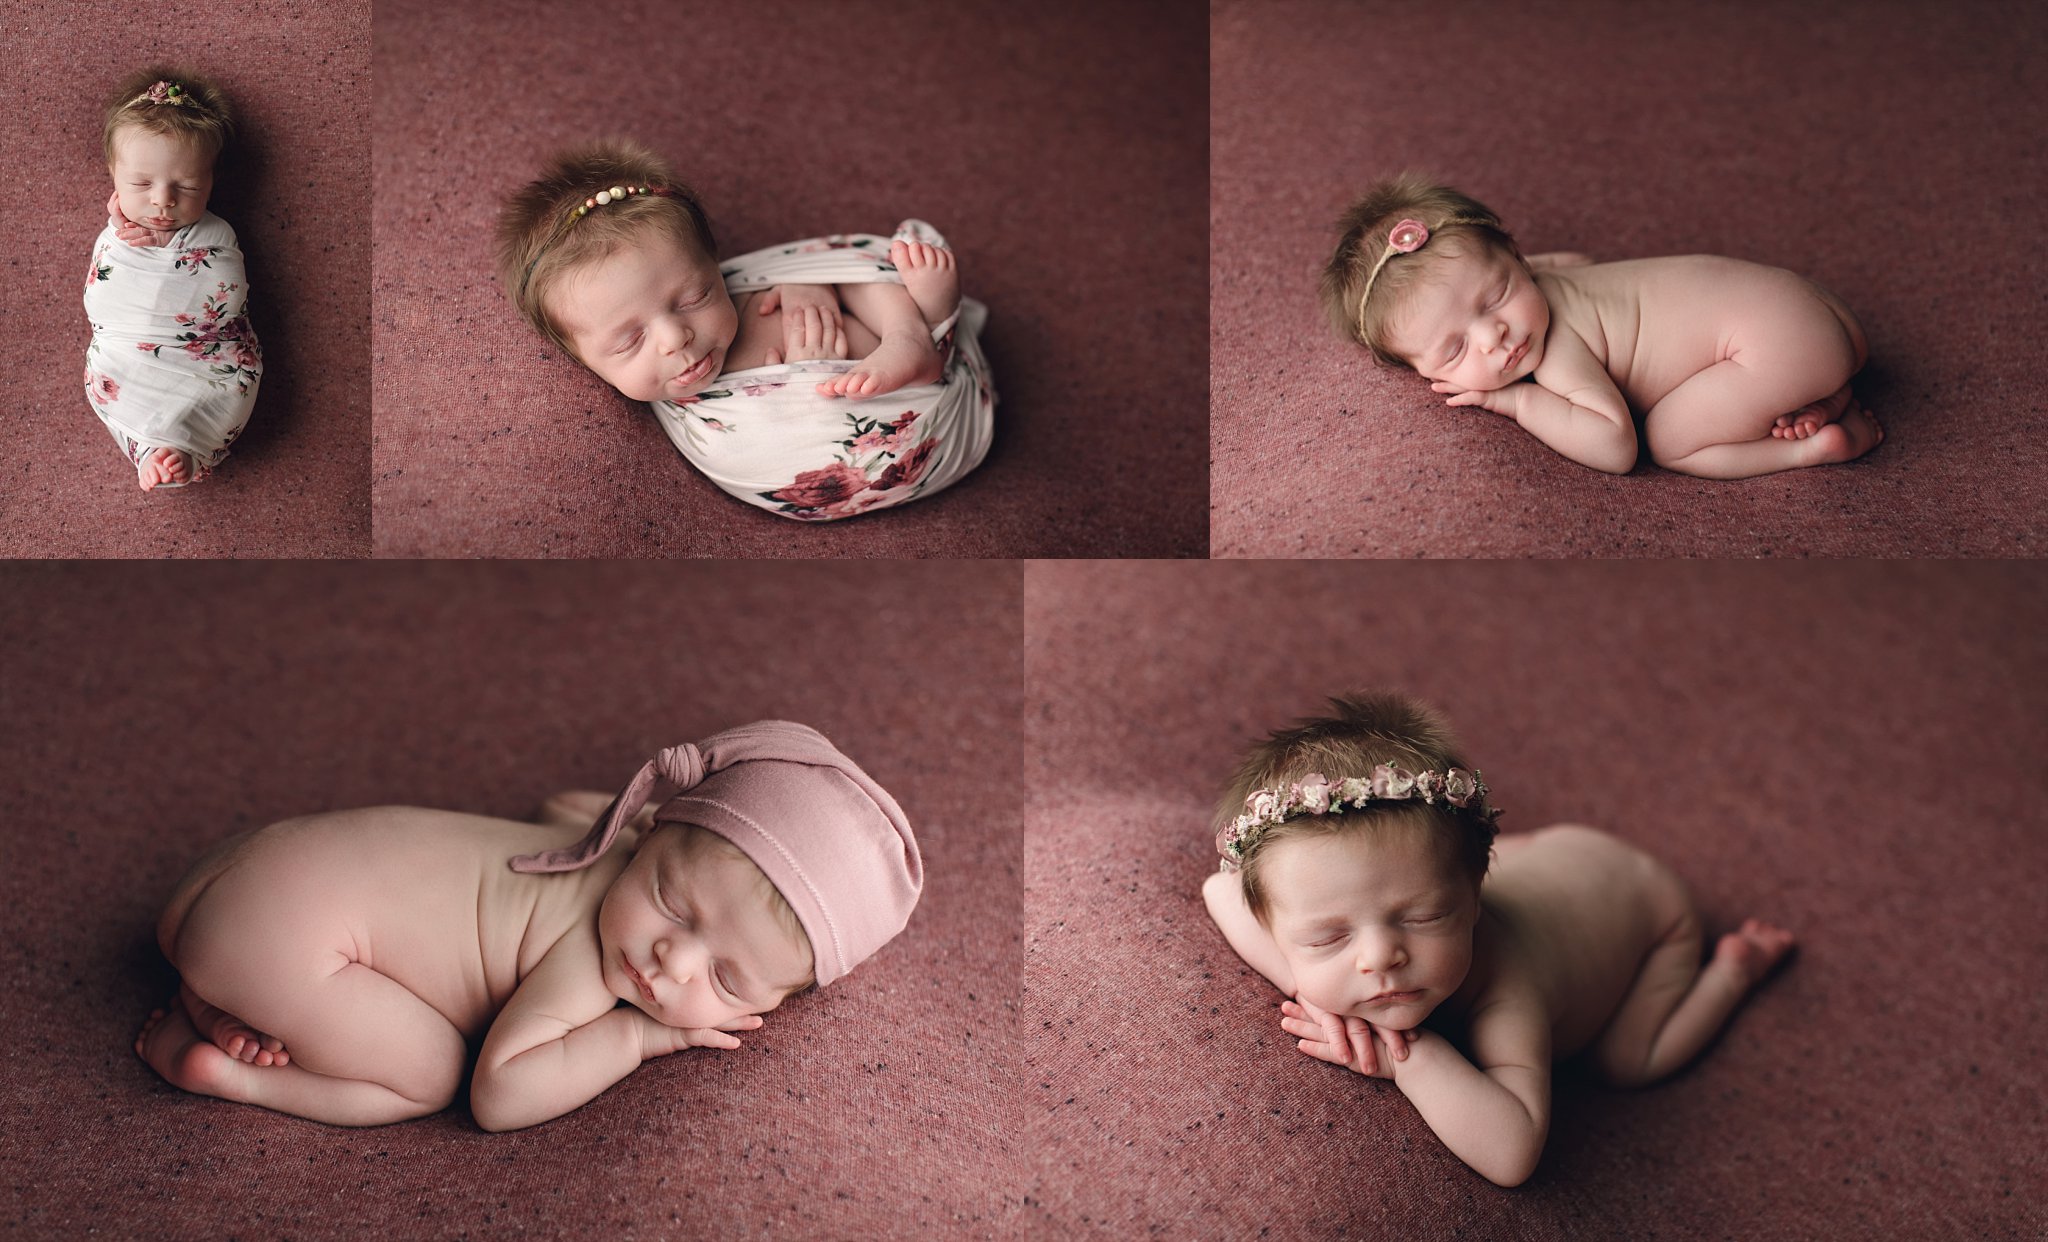 Newborn baby girl with fuzzy hair sleeping on dark pink blanket